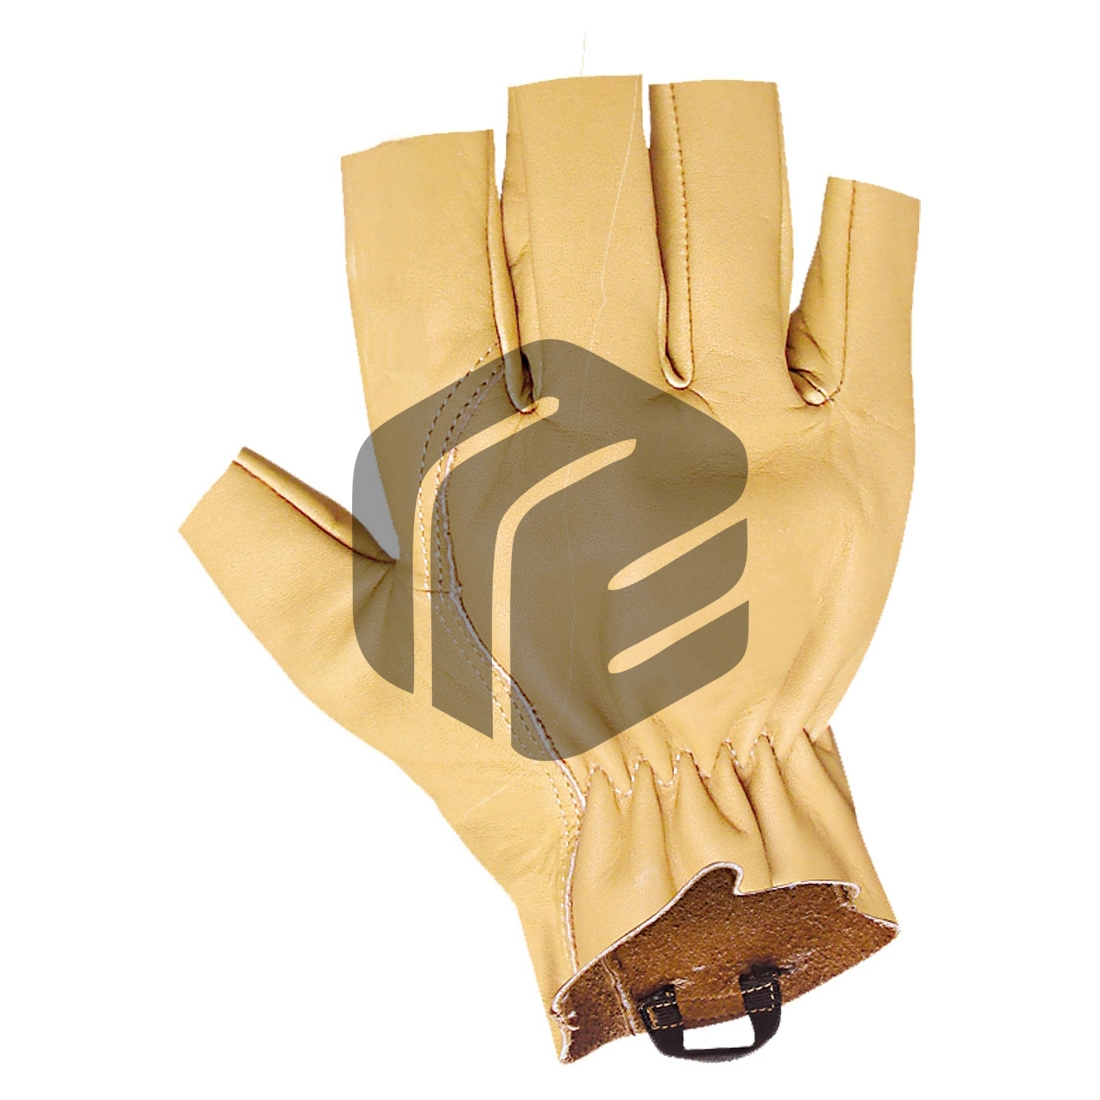 Abseil & Rappel Gloves